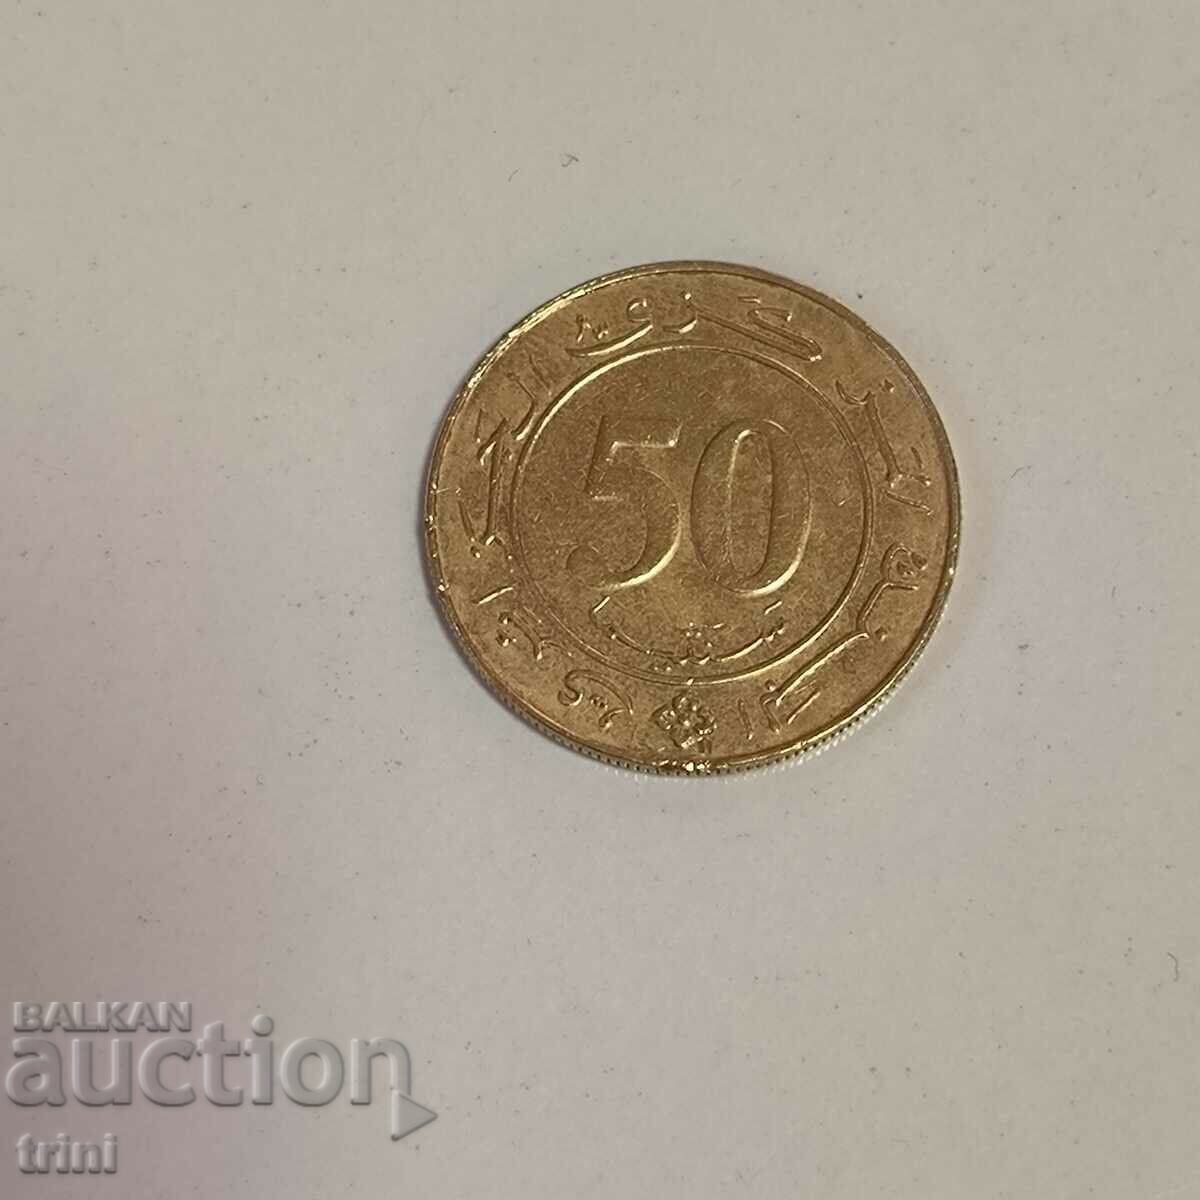 Algeria 50 centimes 1988 25 Central Bank of Algeria